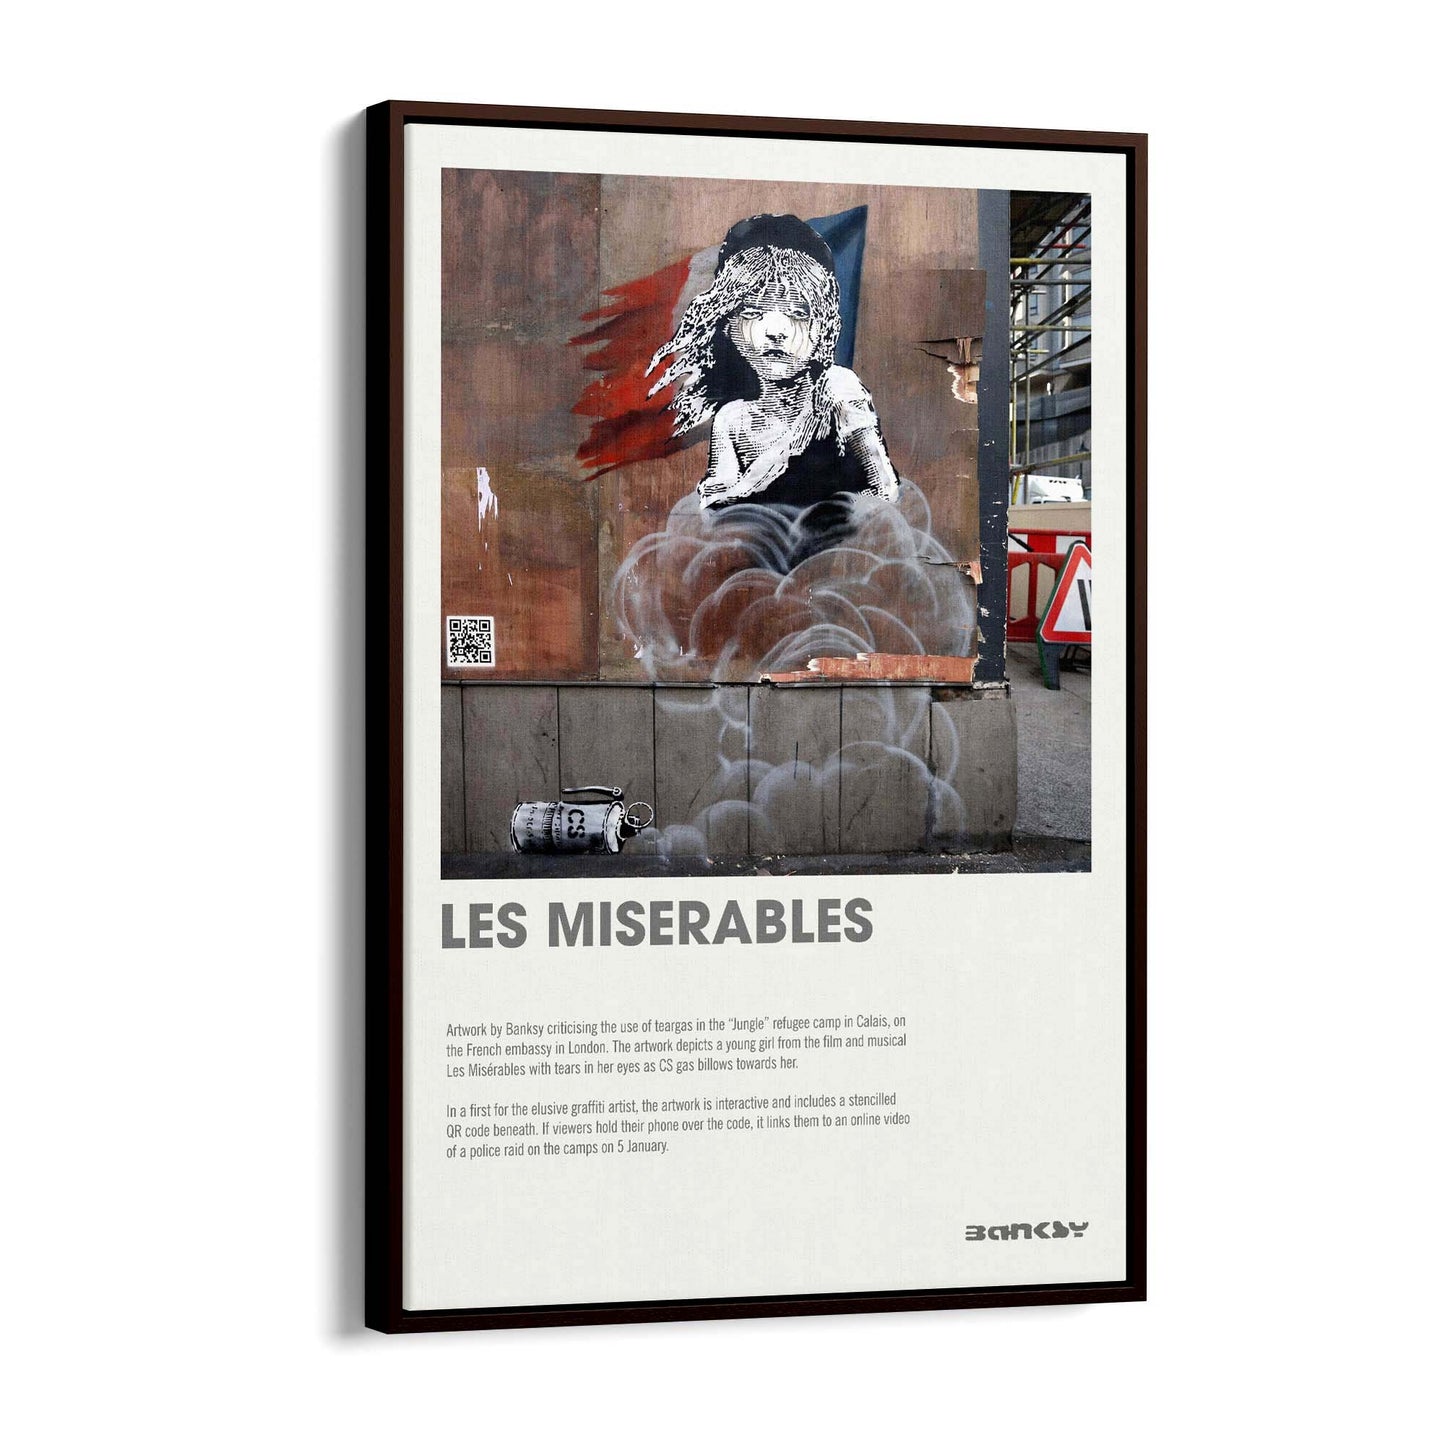 Banksy "Les Miserables" Graffiti Gallery Wall Art - The Affordable Art Company